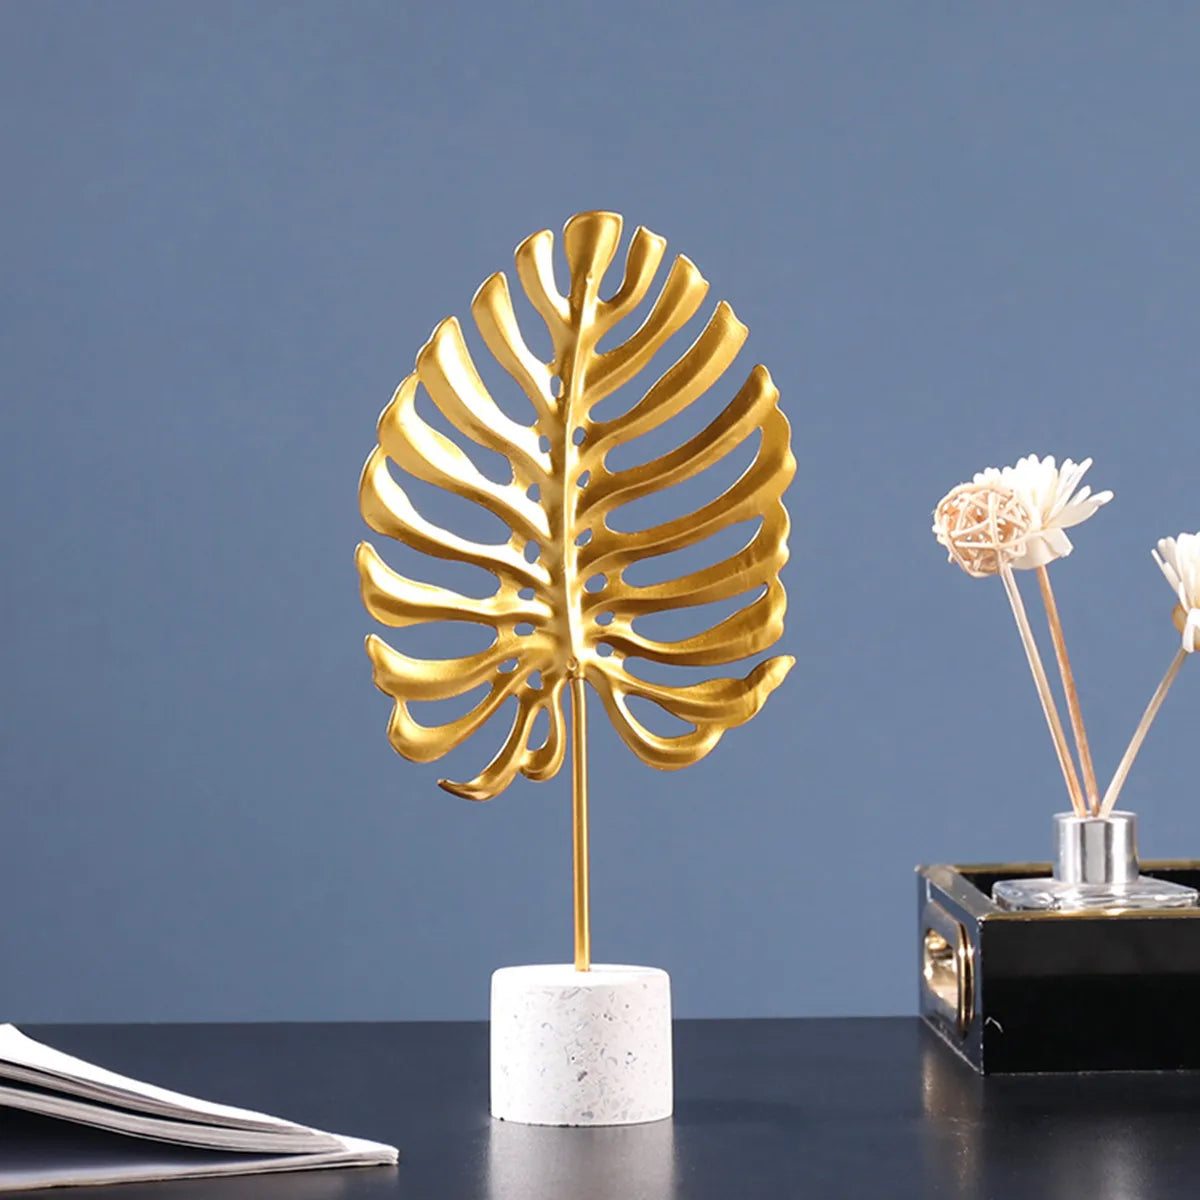 1Pcs luxury Nordic iron art turtle leaf decorative ornaments creative home decor desktop metal crafts furnishings